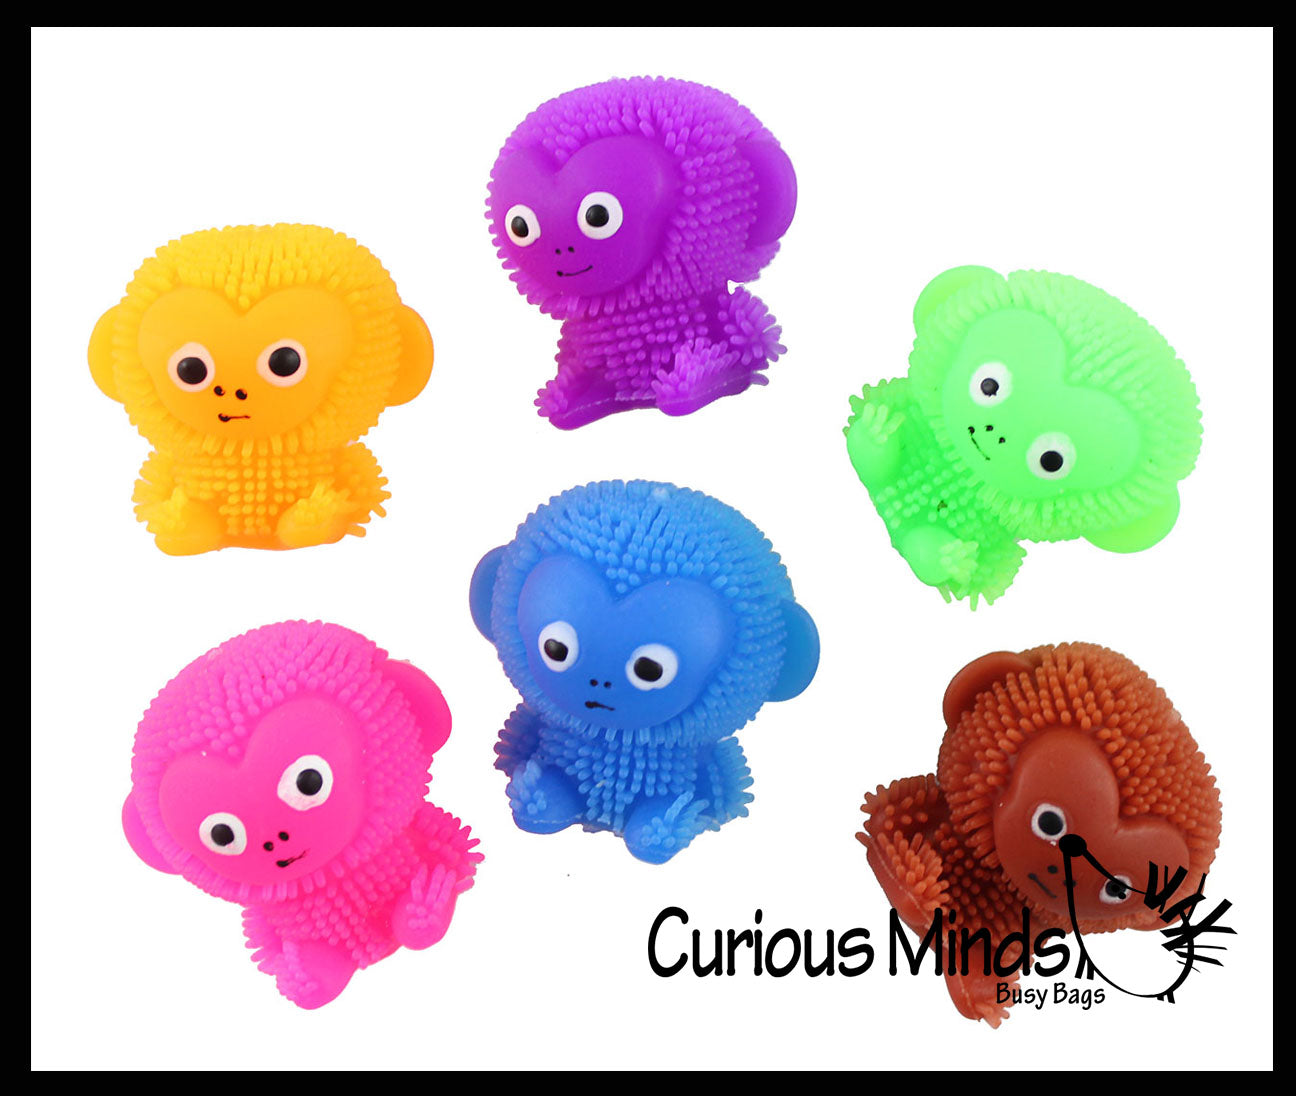 Mini Puffer Monkey - Small Novelty Toy - Party Favors - Cute Tiny Fidget Toys - Monkey Lover